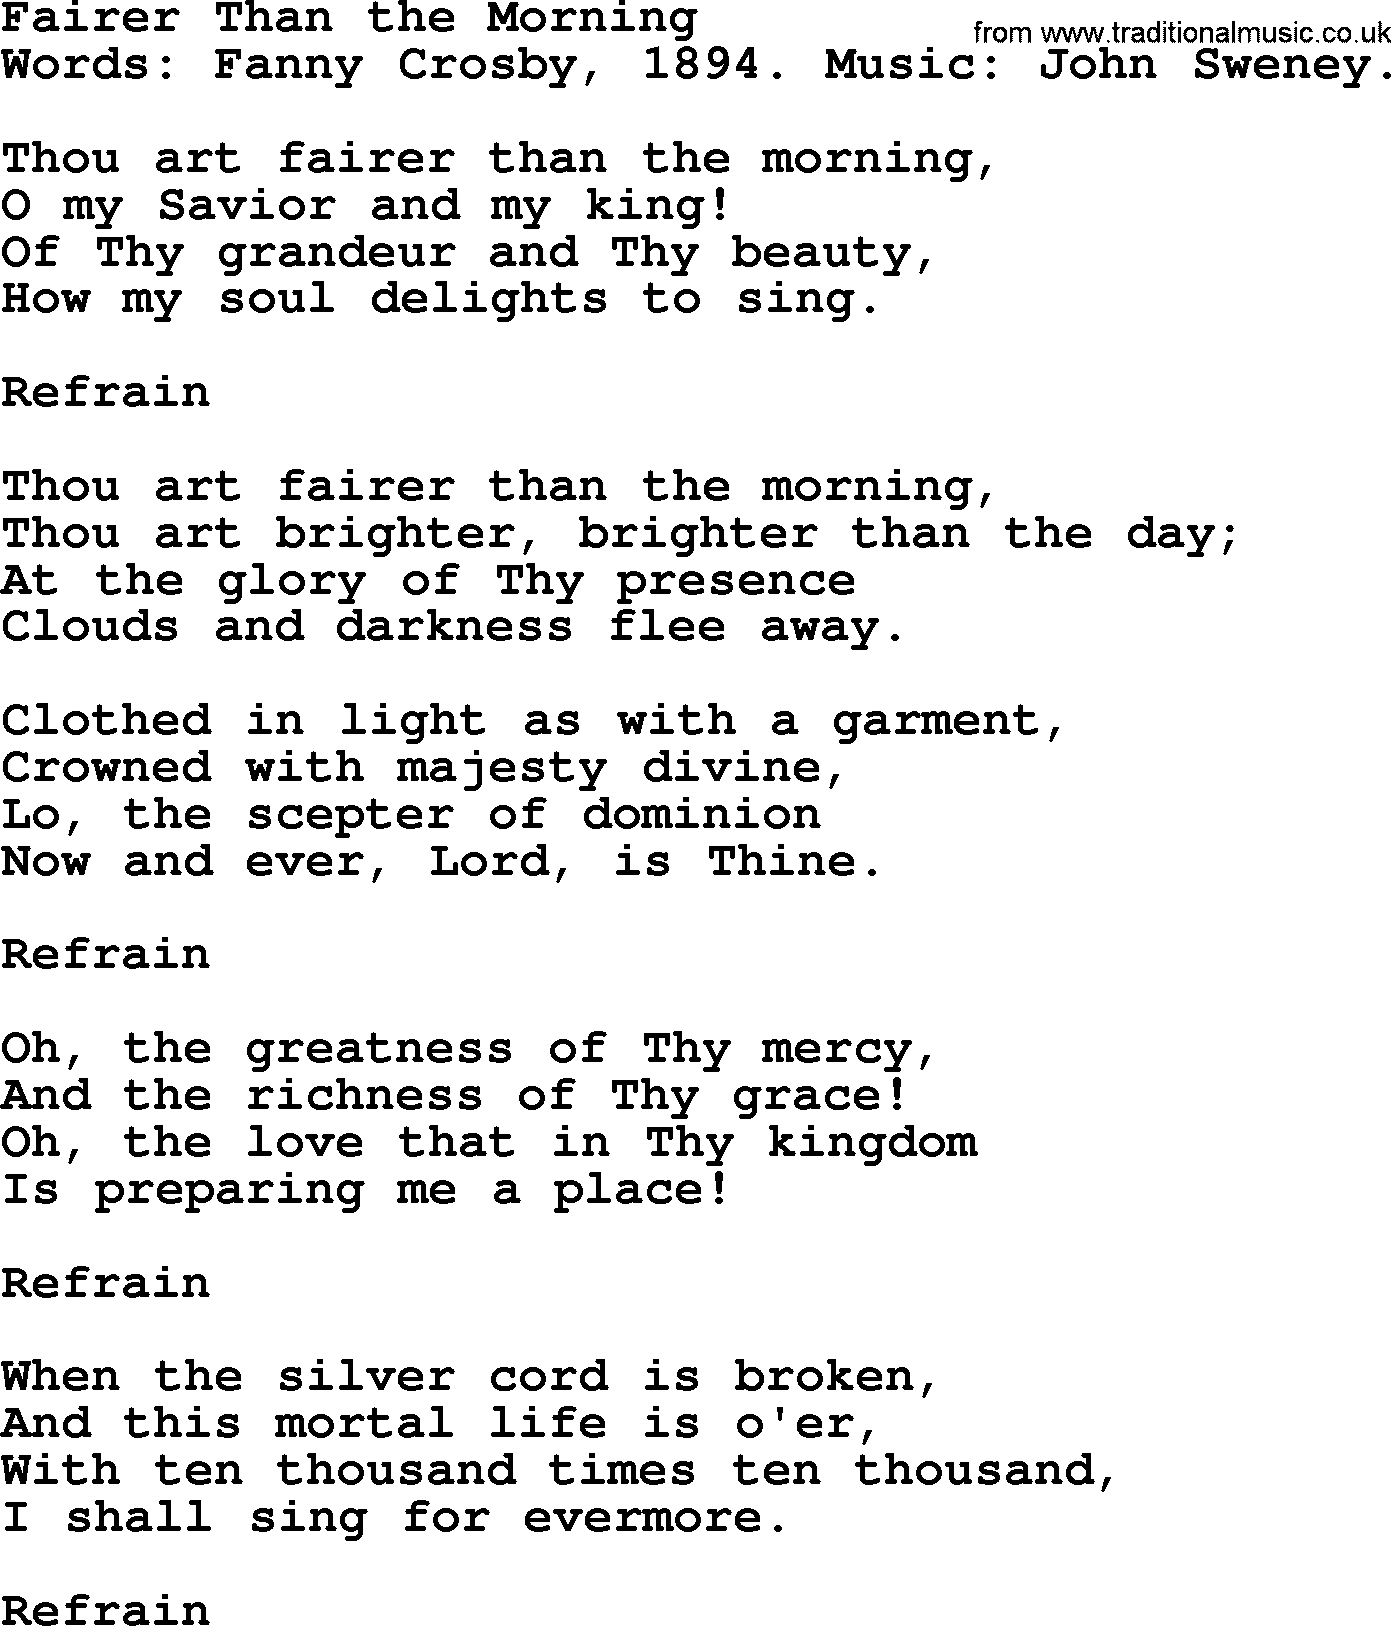 Fanny Crosby song: Fairer Than The Morning, lyrics